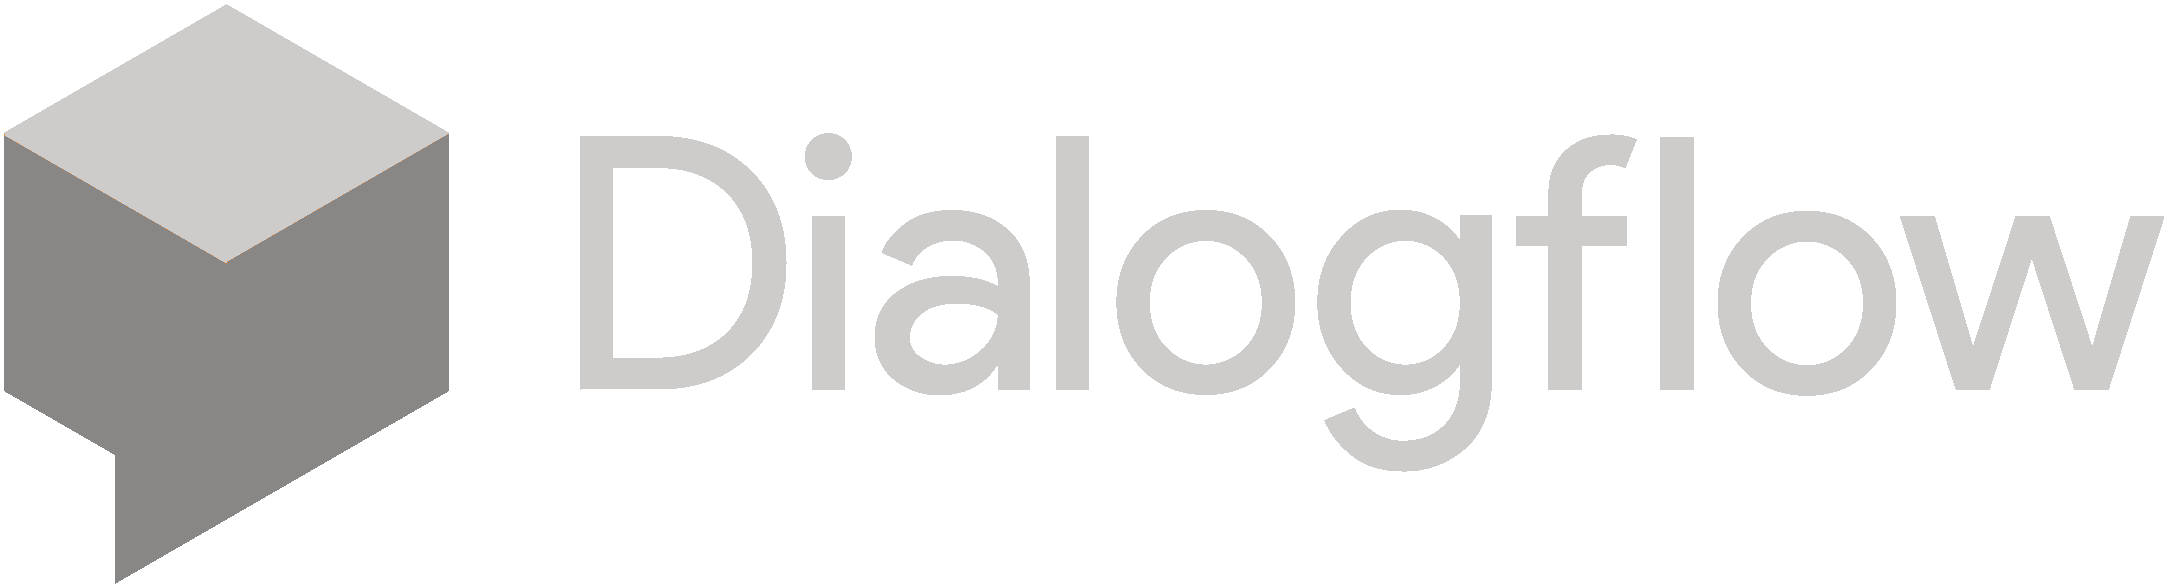 google dialogflow logo